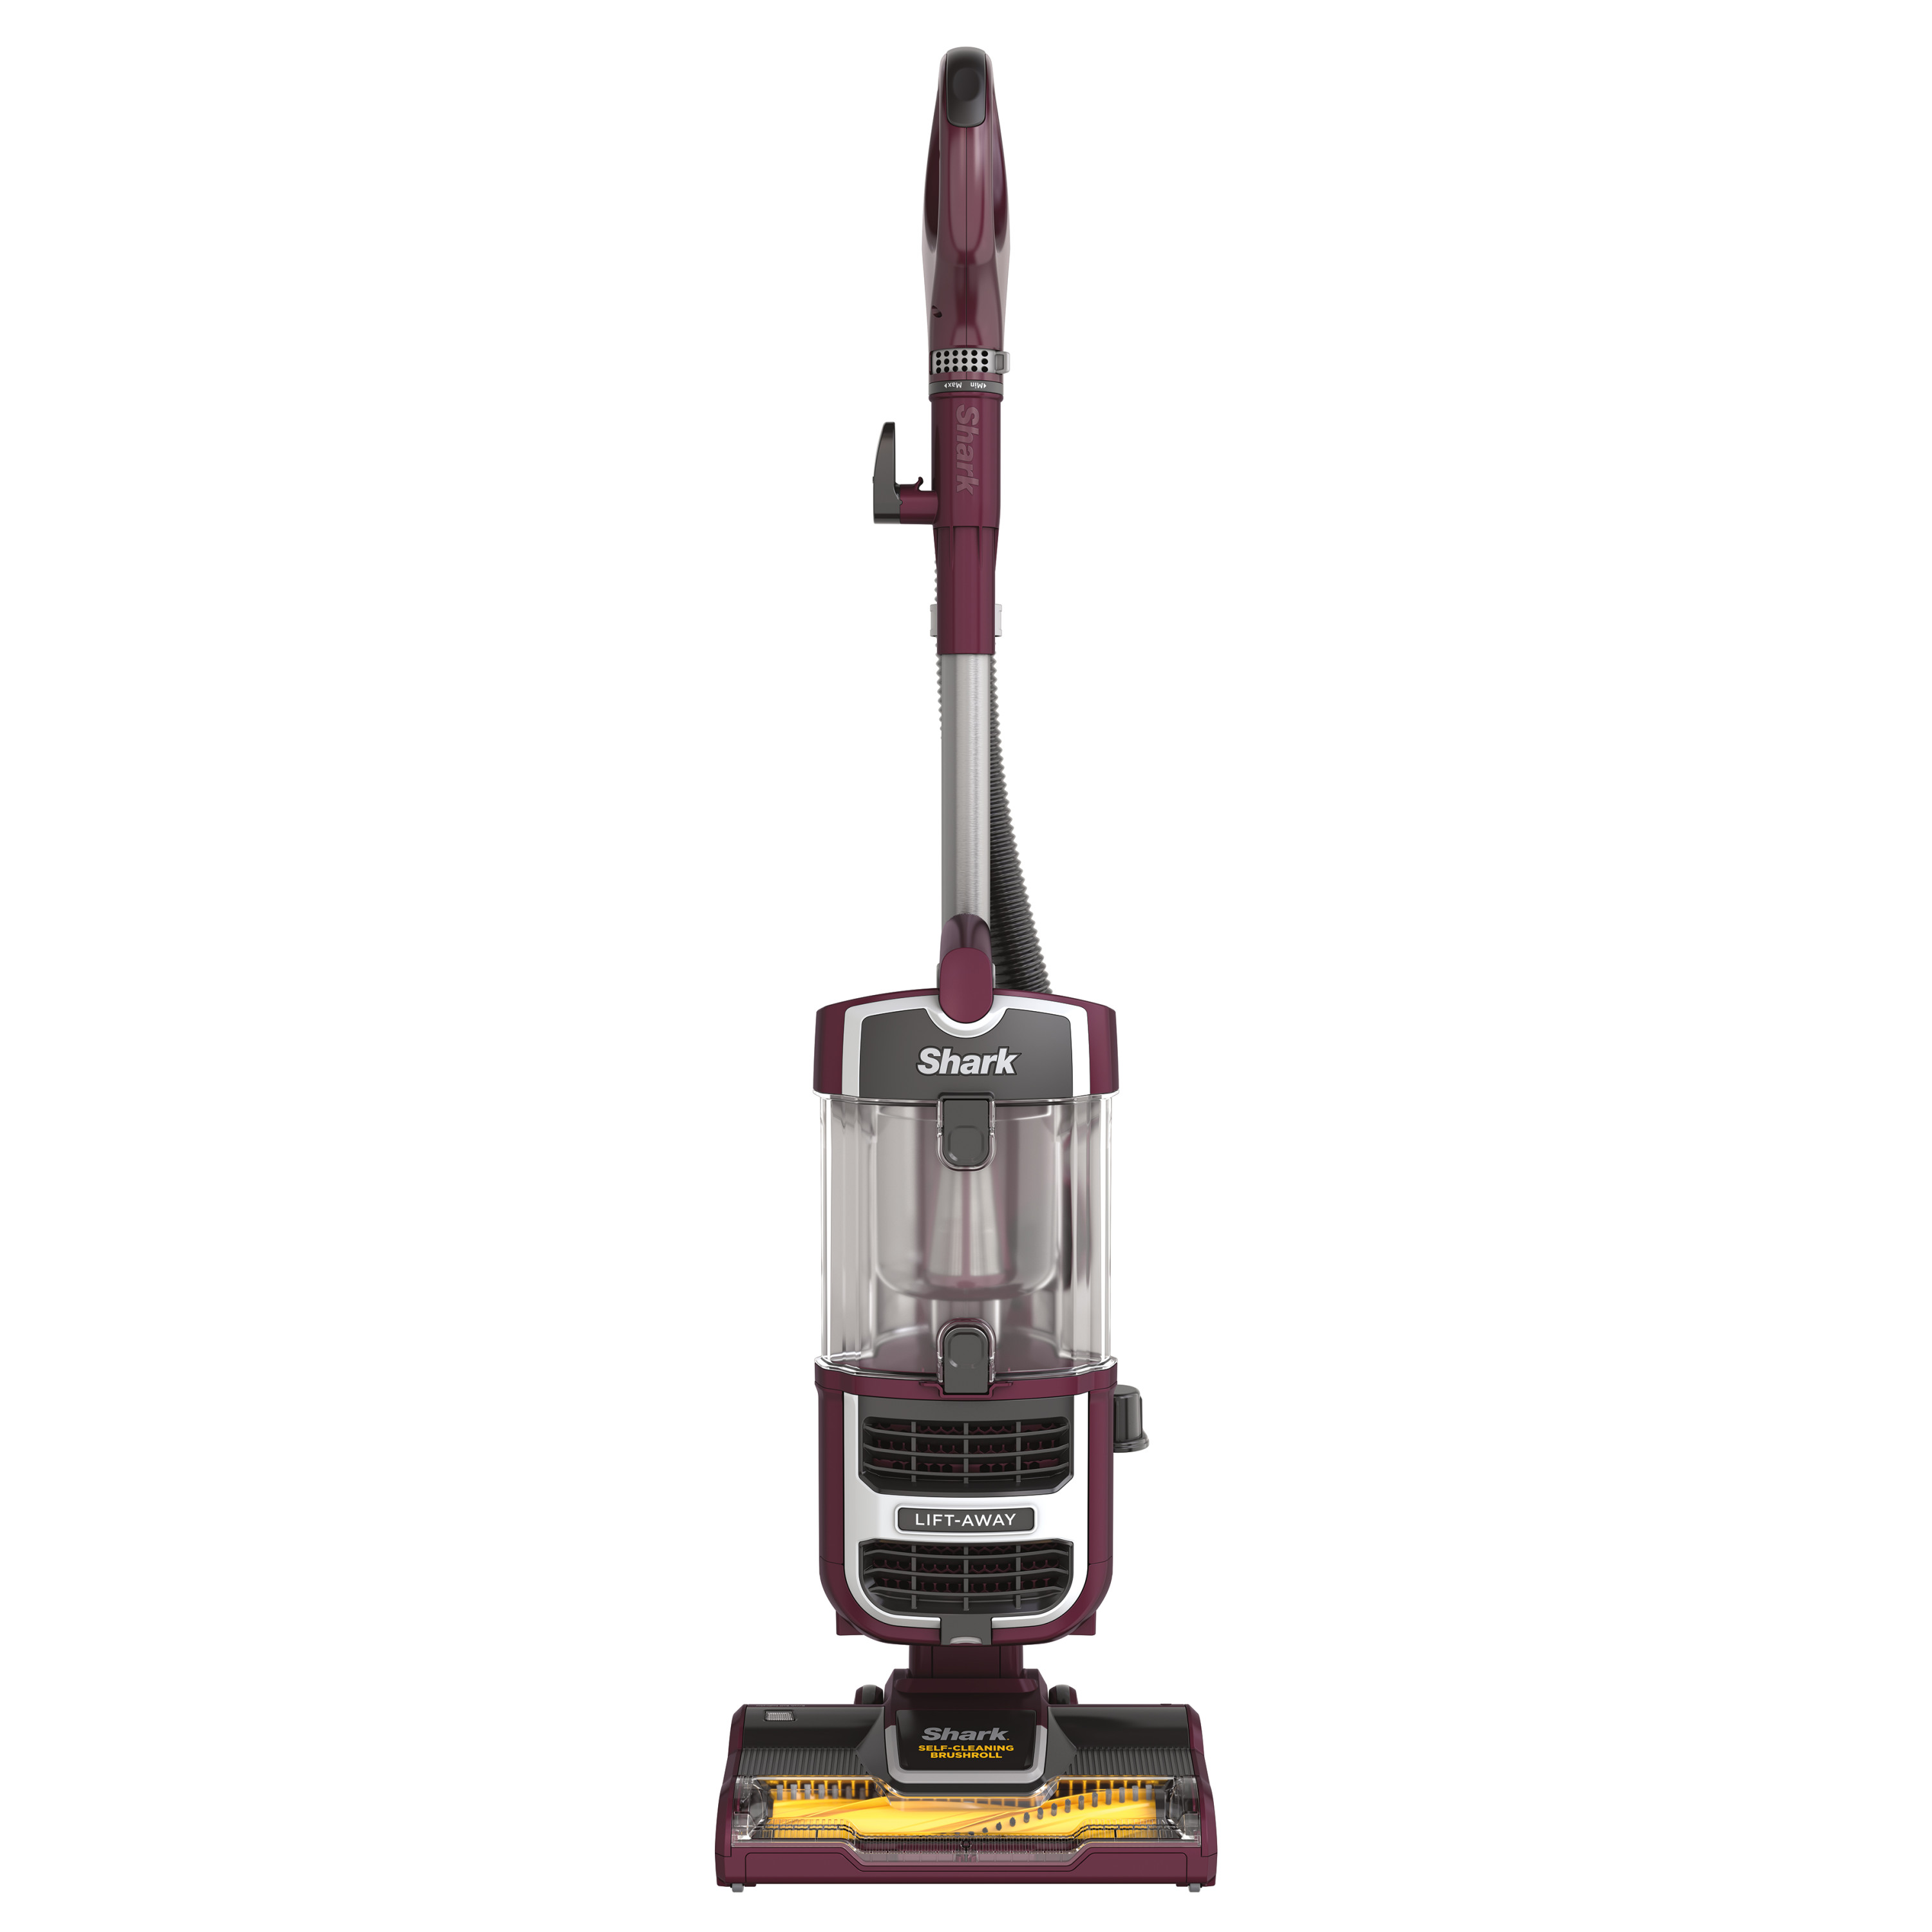 Shark Navigator Upright Vacuum Cleaner with Self-Cleaning Brushroll, Purple - image 1 of 3